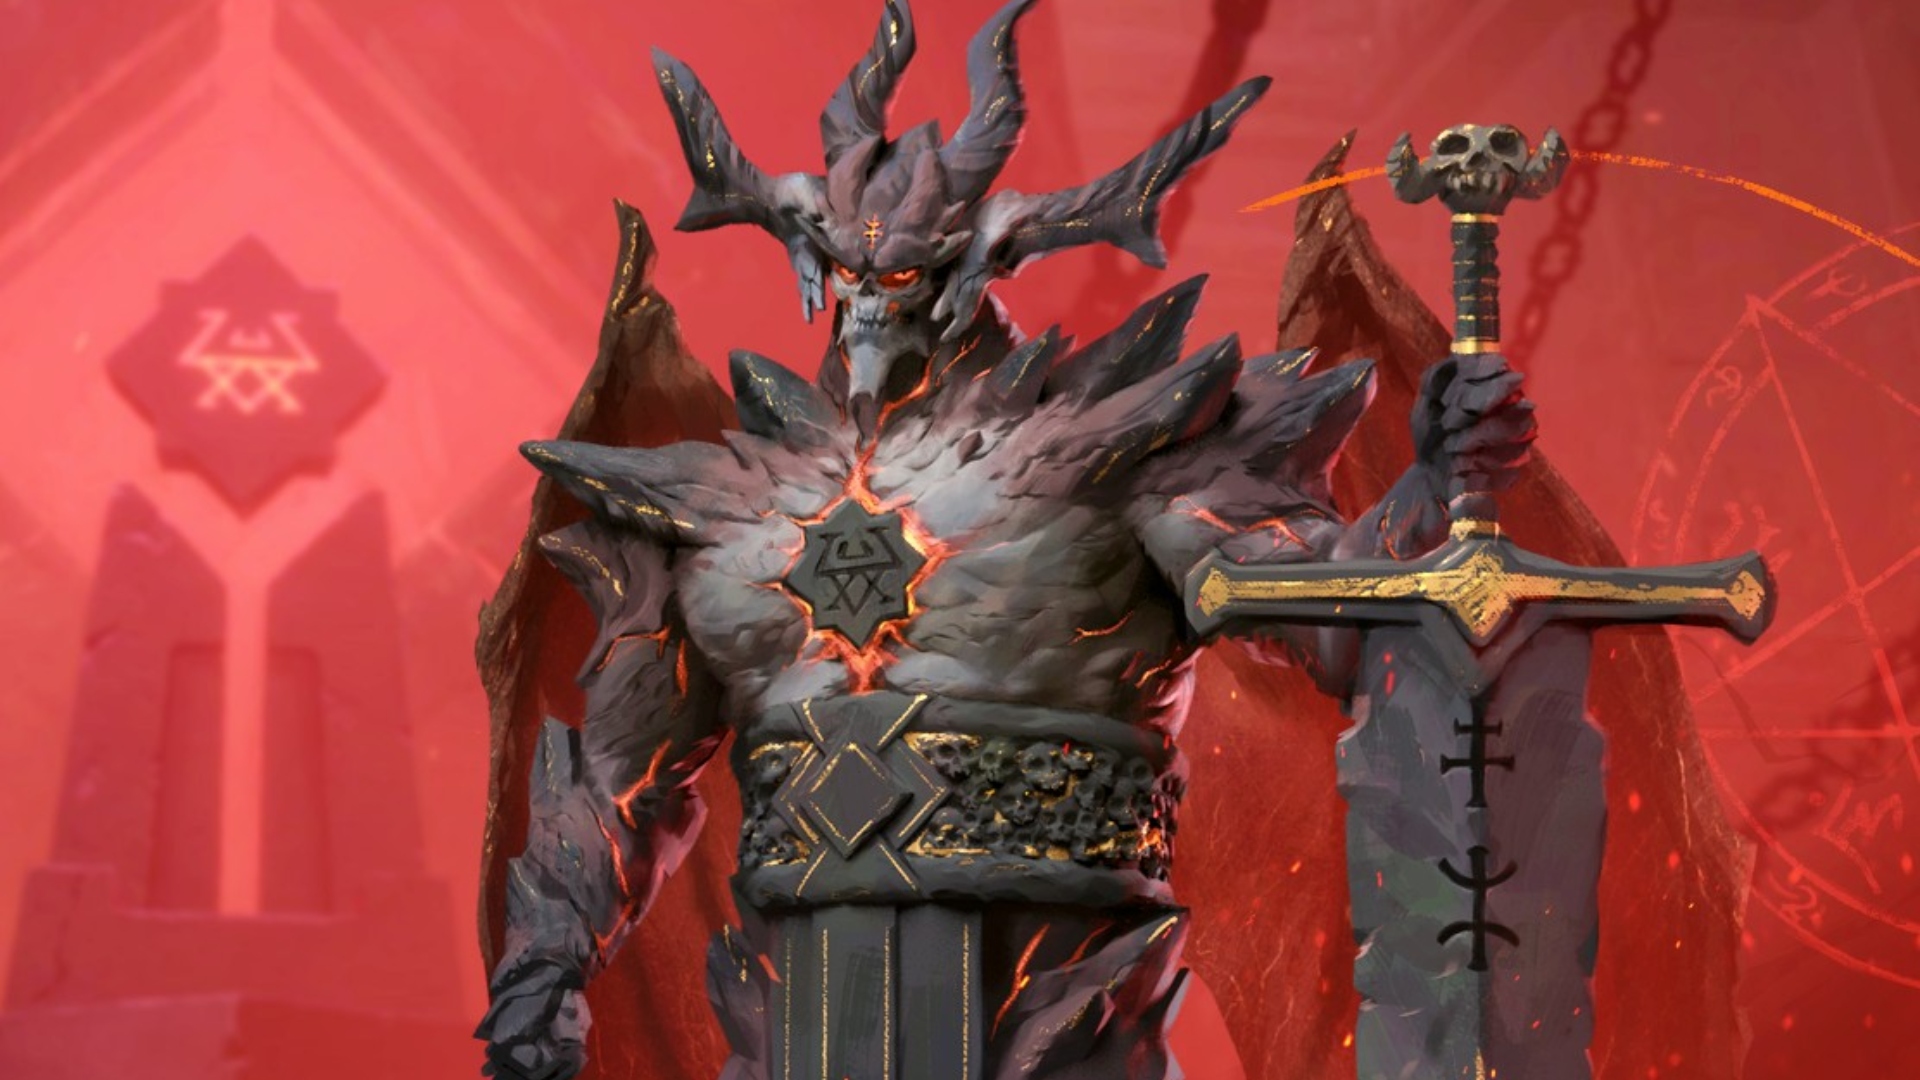 Solium Infernum Astaroth: A huge, Hellish monster made of rock, Astaroth from strategy game Solium Infernum